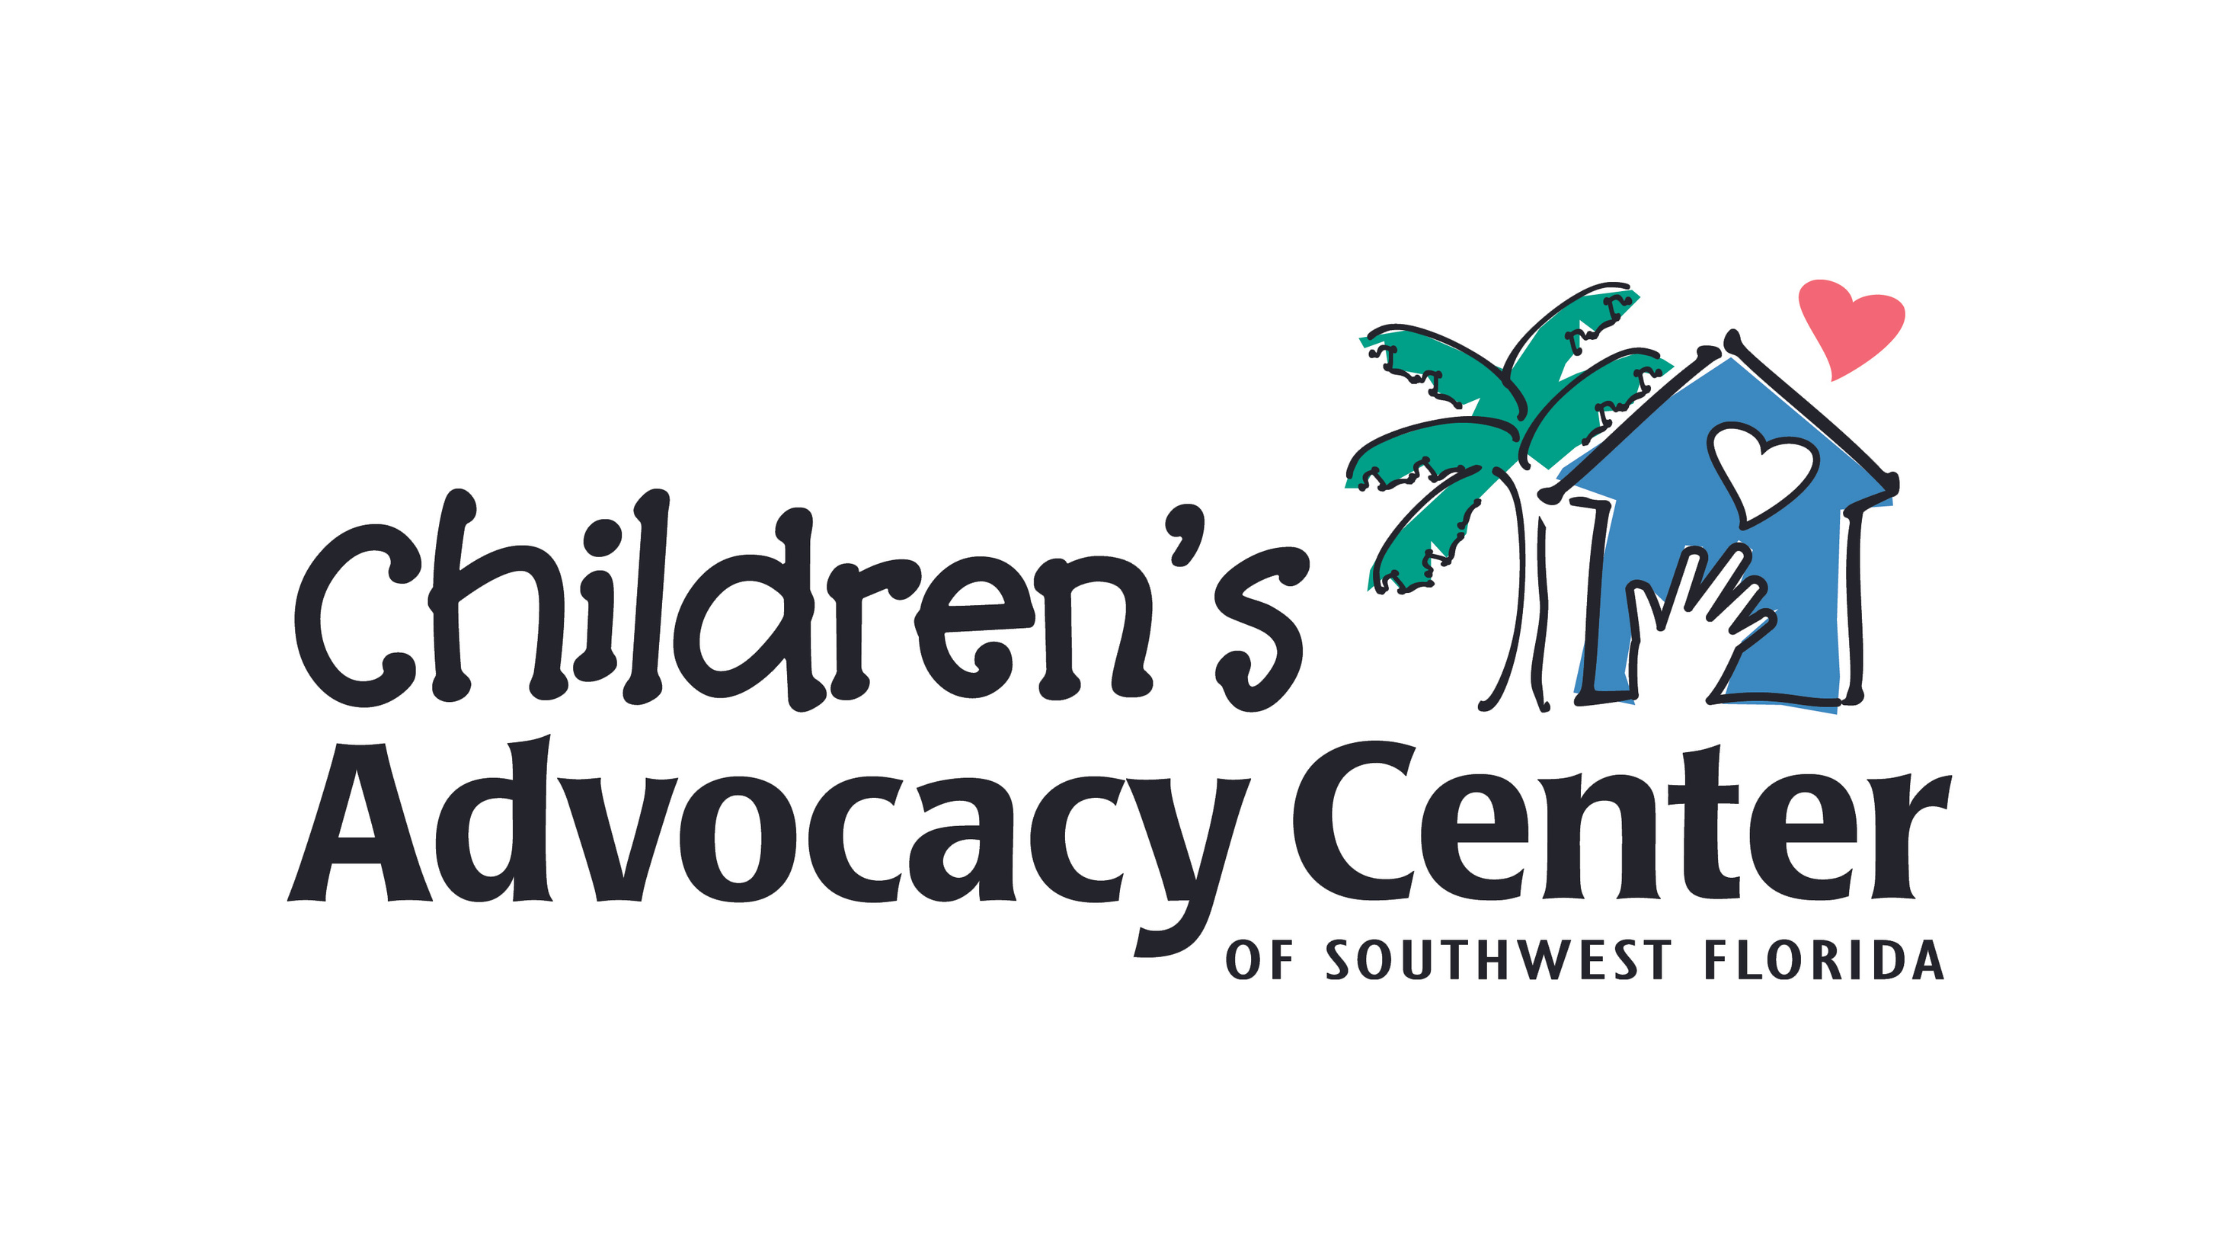 The Children’s Advocacy Center expands prevention programs